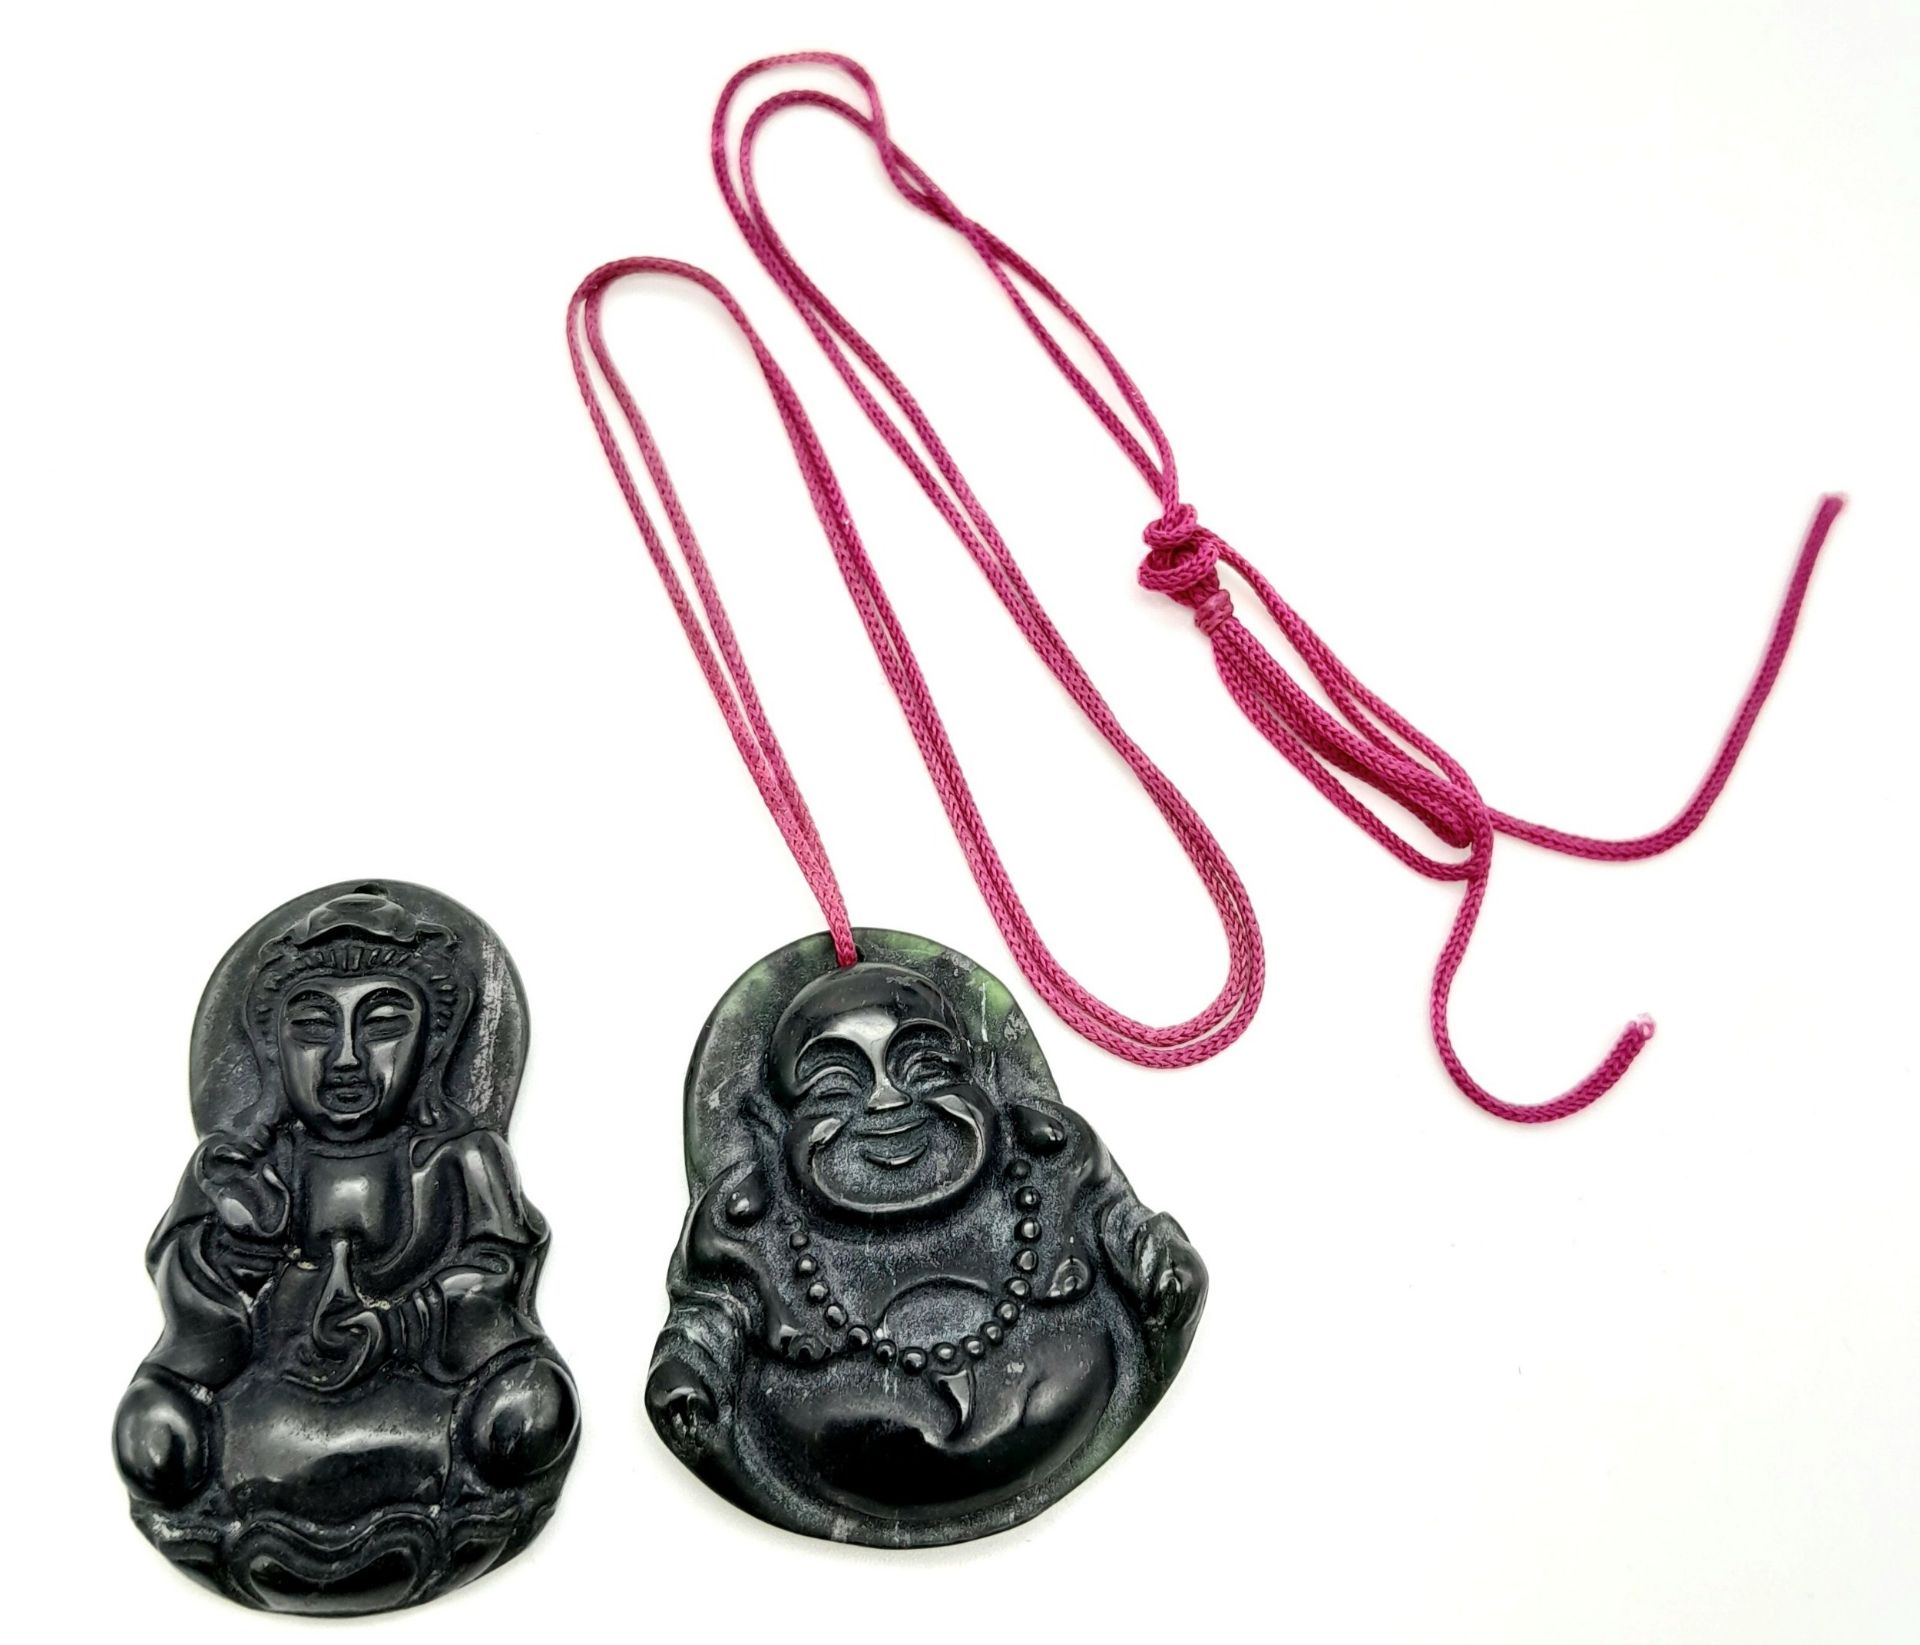 2 x Black Onyx Buddha Pendants - Buddha and Laughing Buddha. 4.5cm and 4cm length. 25g total weight.